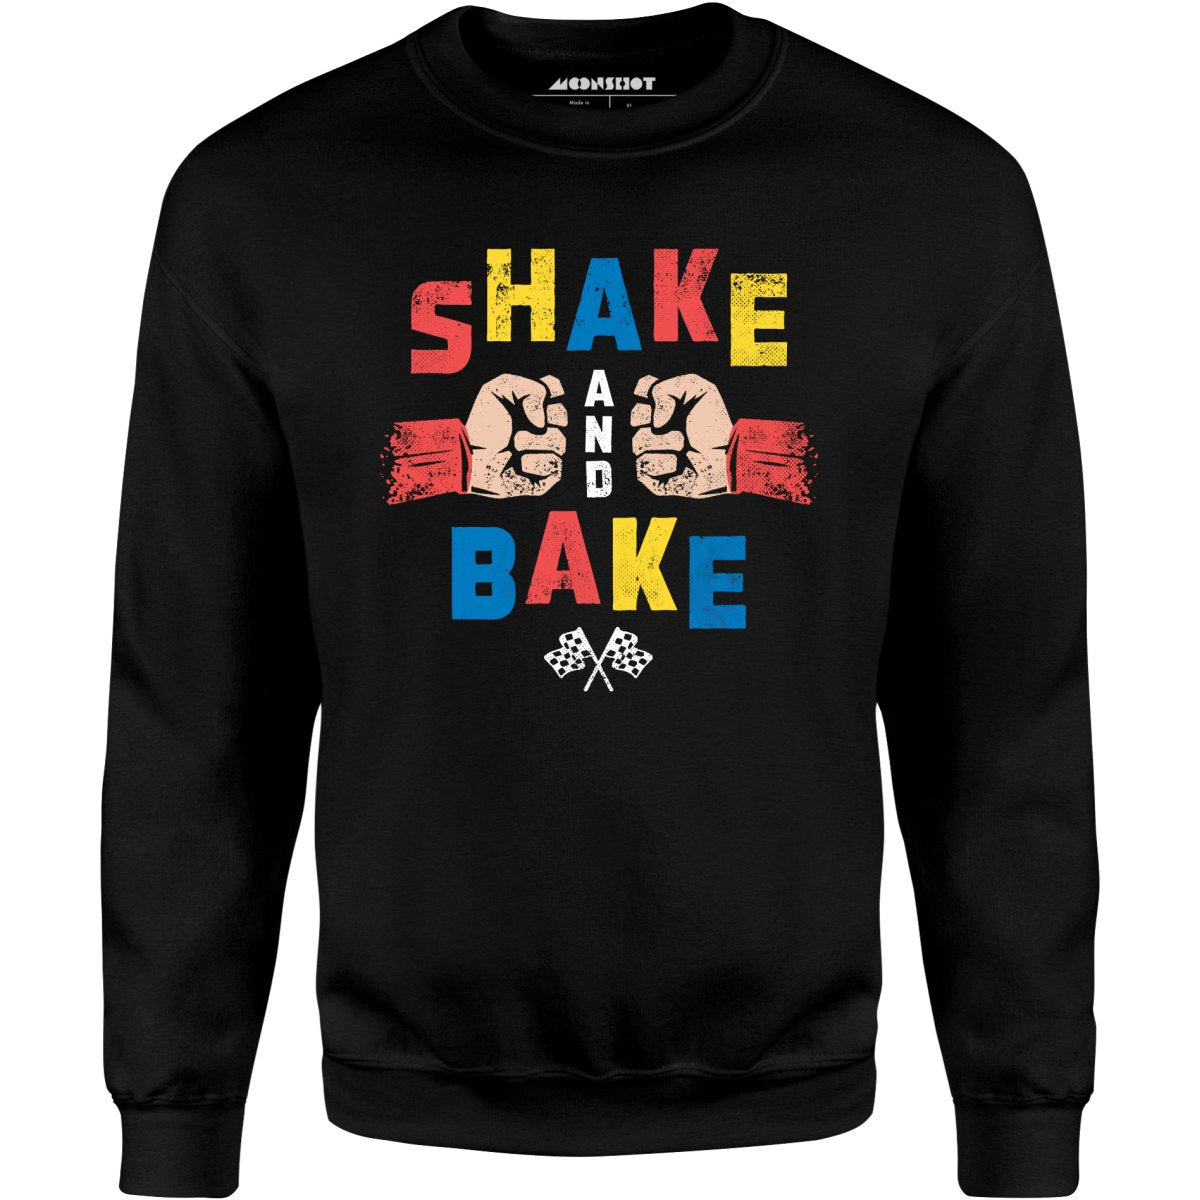 Shake and Bake - Unisex Sweatshirt